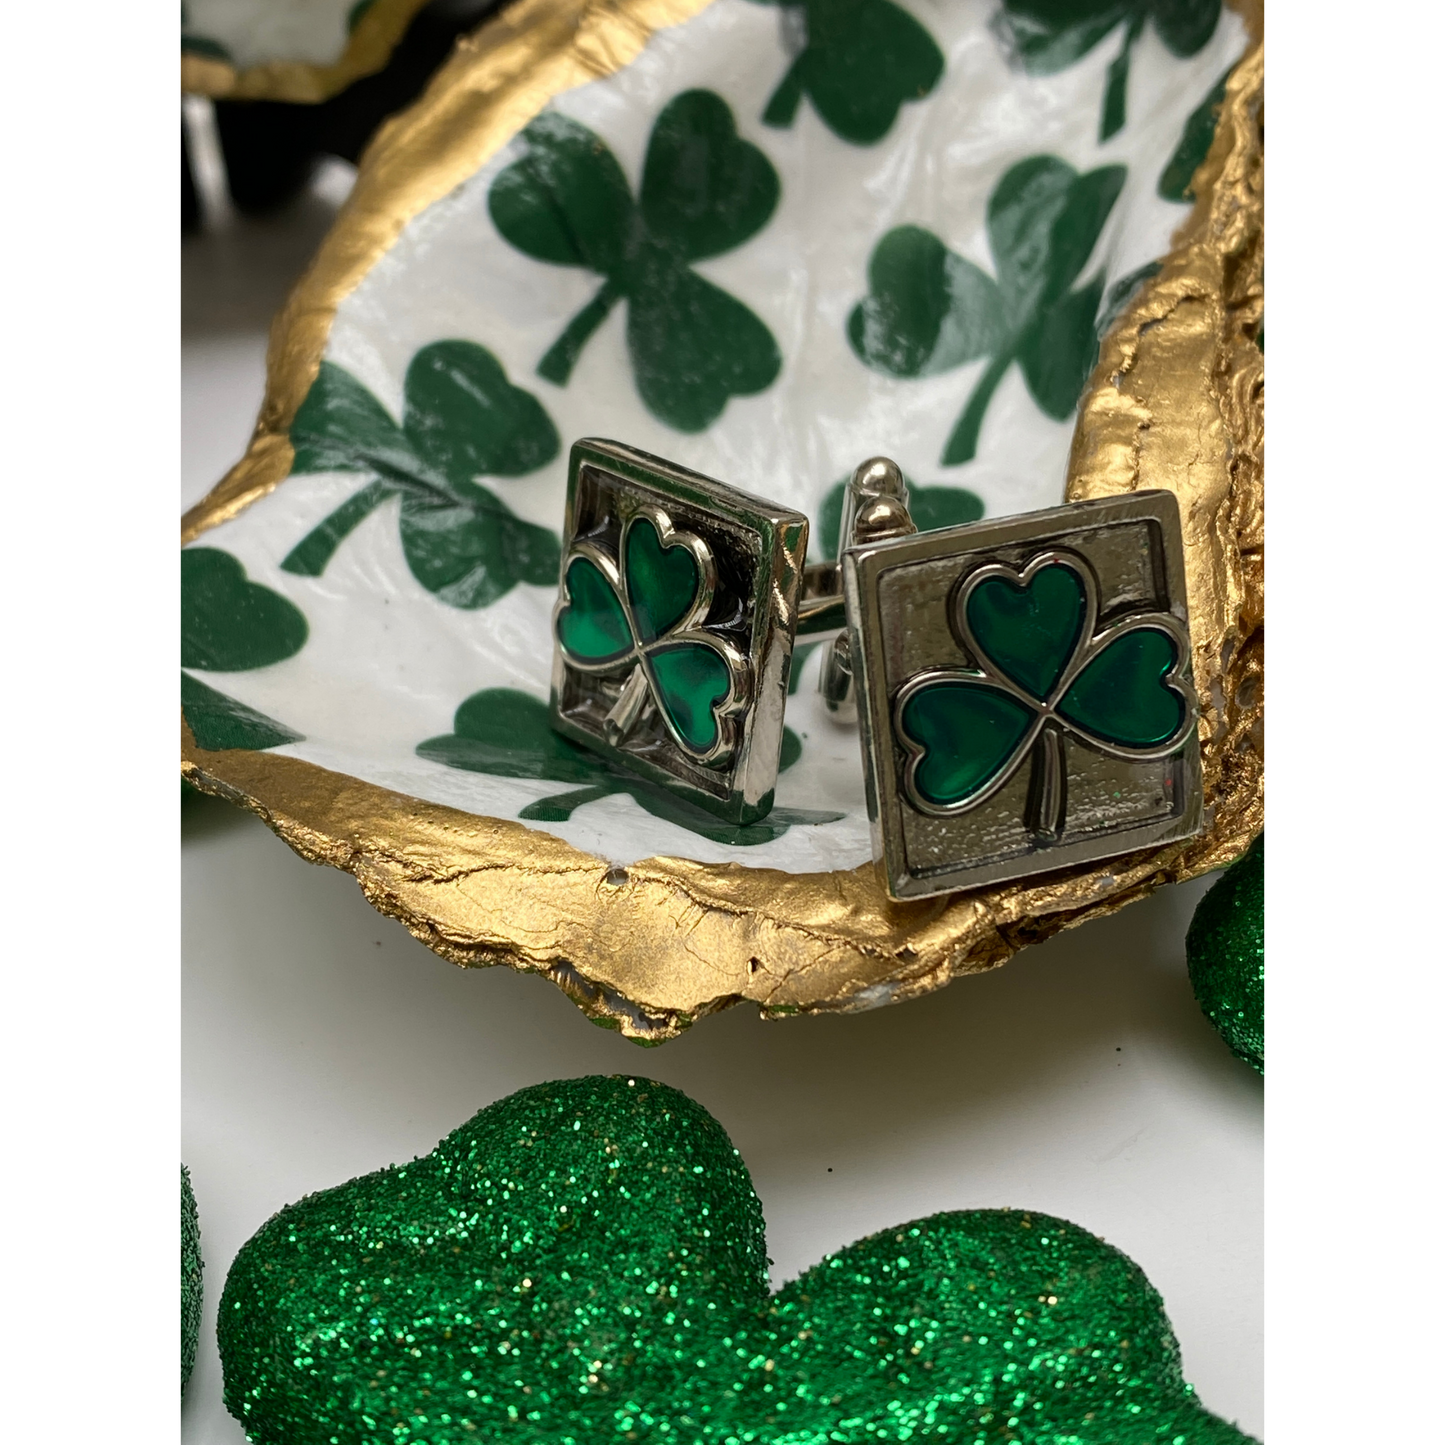 Cuff Links, Shamrocks, Handmade, Gift for Irish Lover, St. Patrick's Day Gift